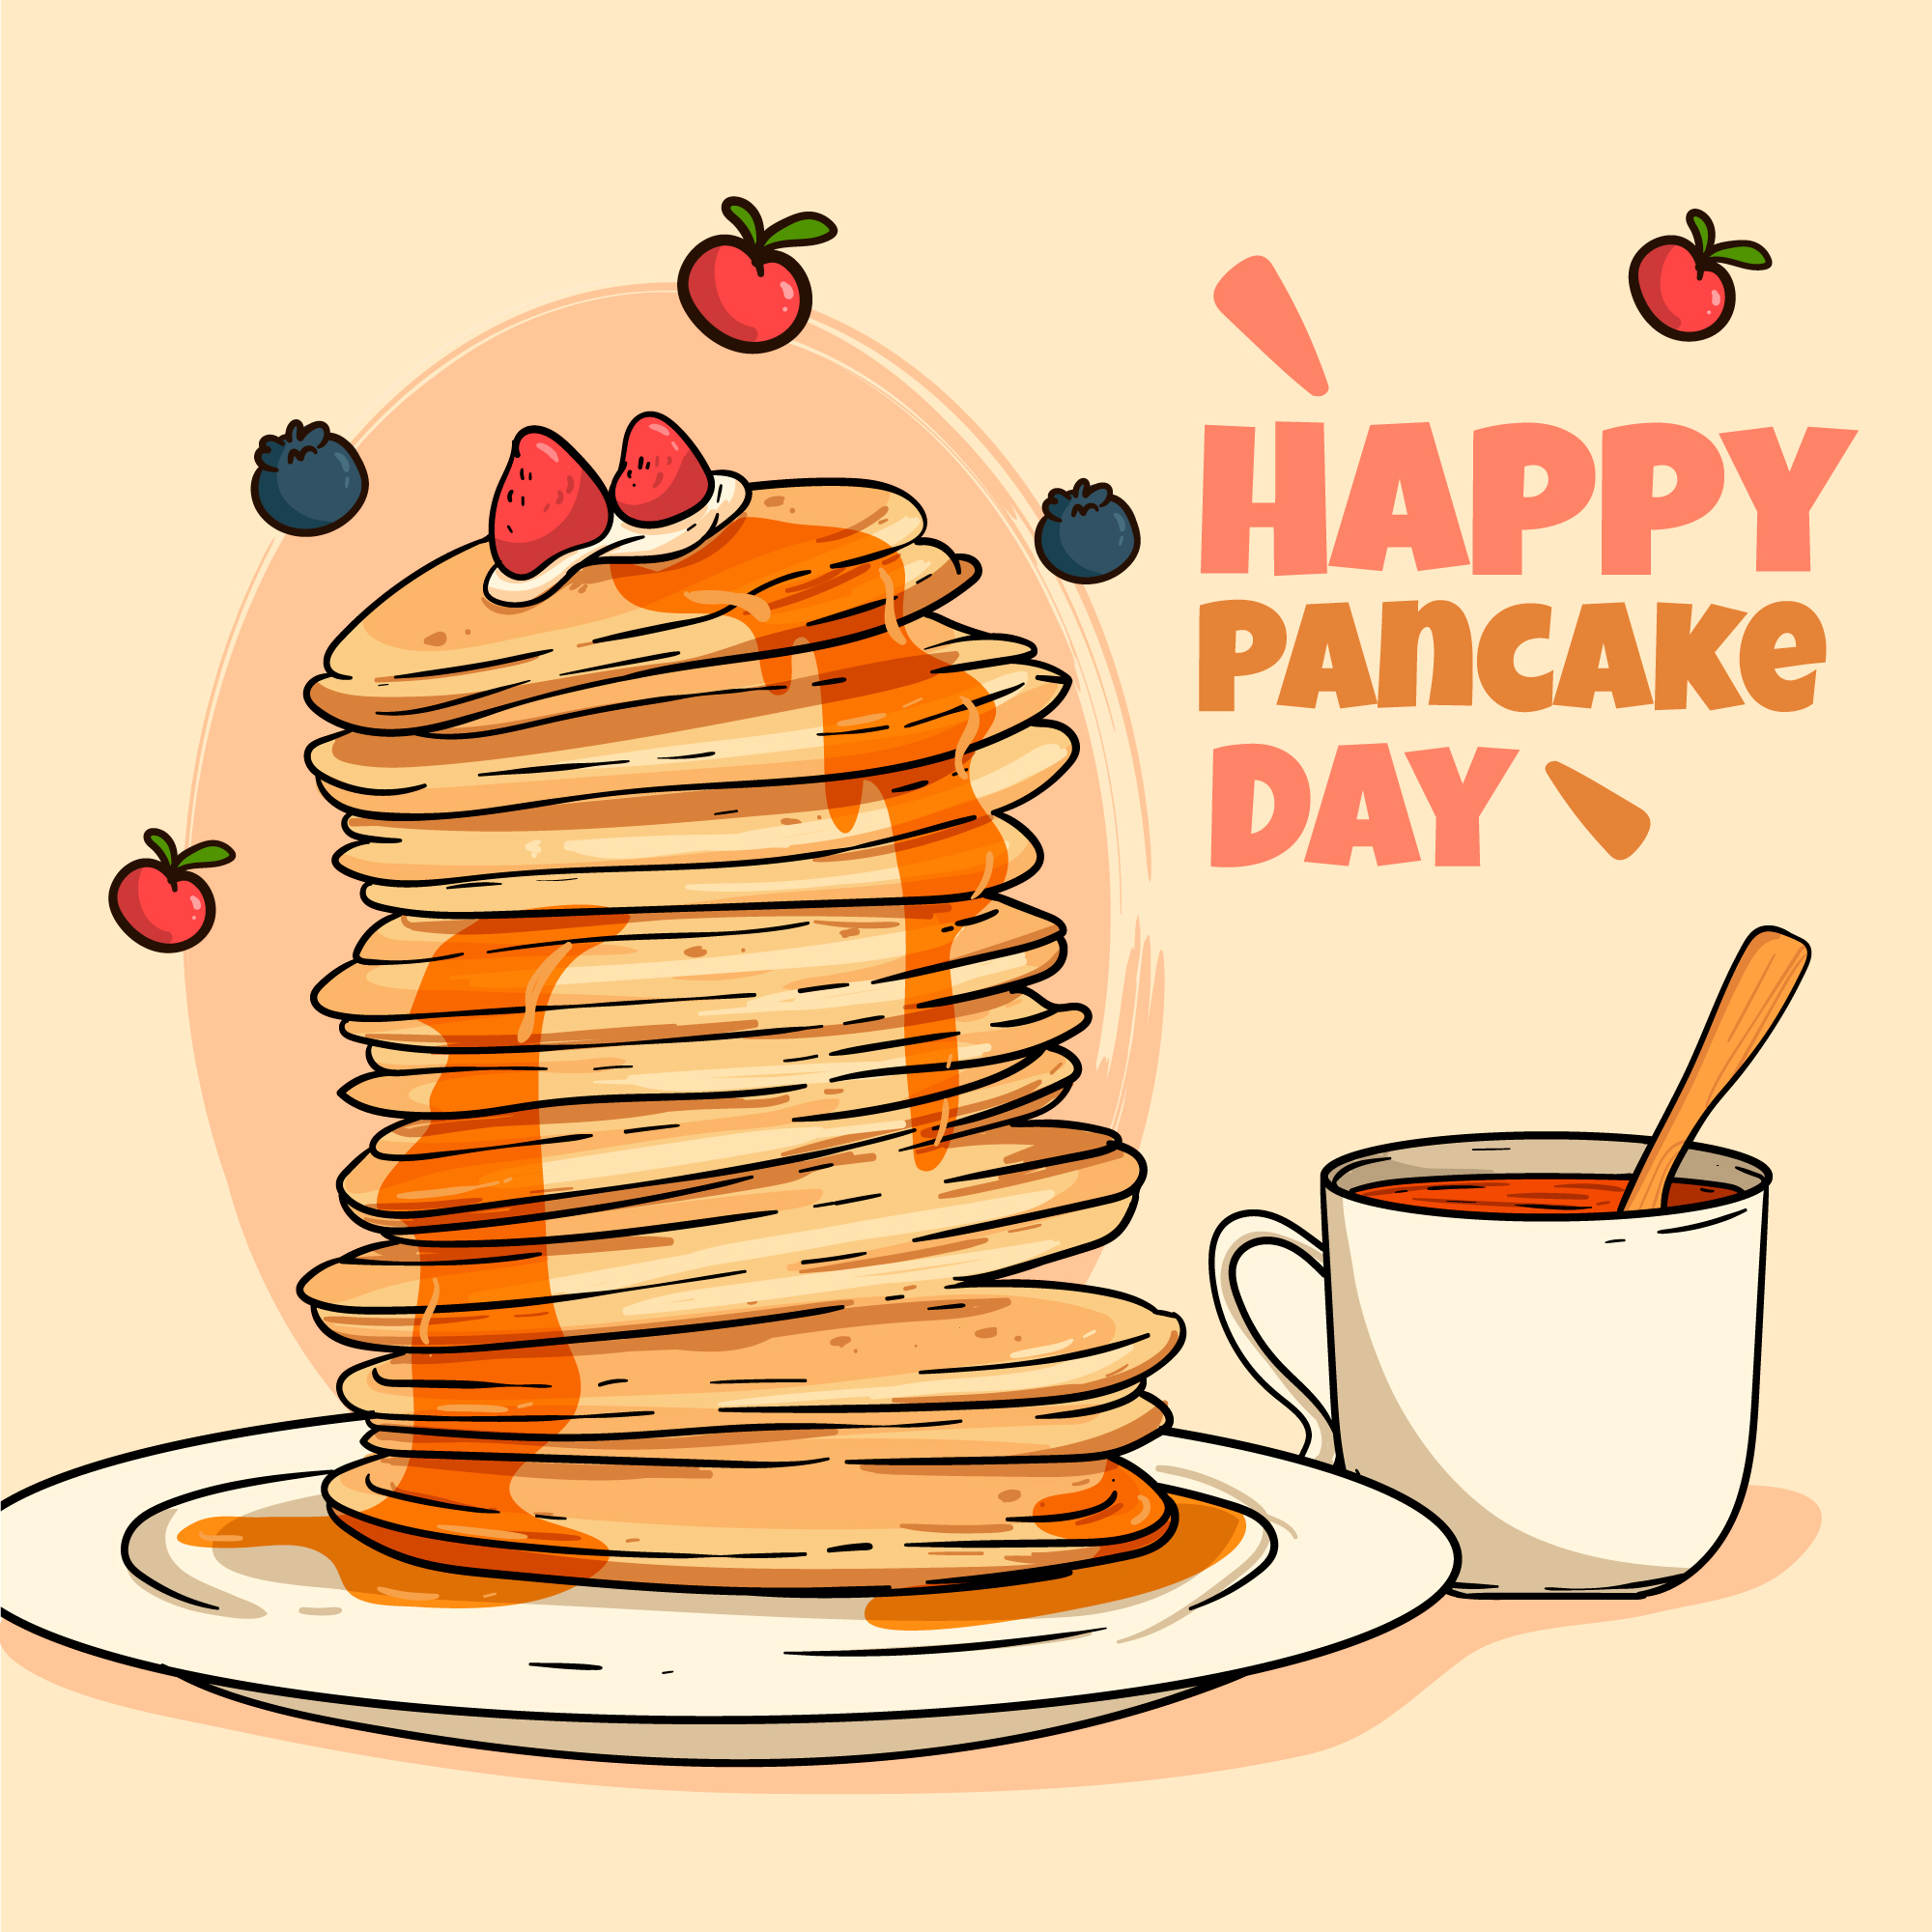 Happy Pancake Day everyone!! - Adico Care